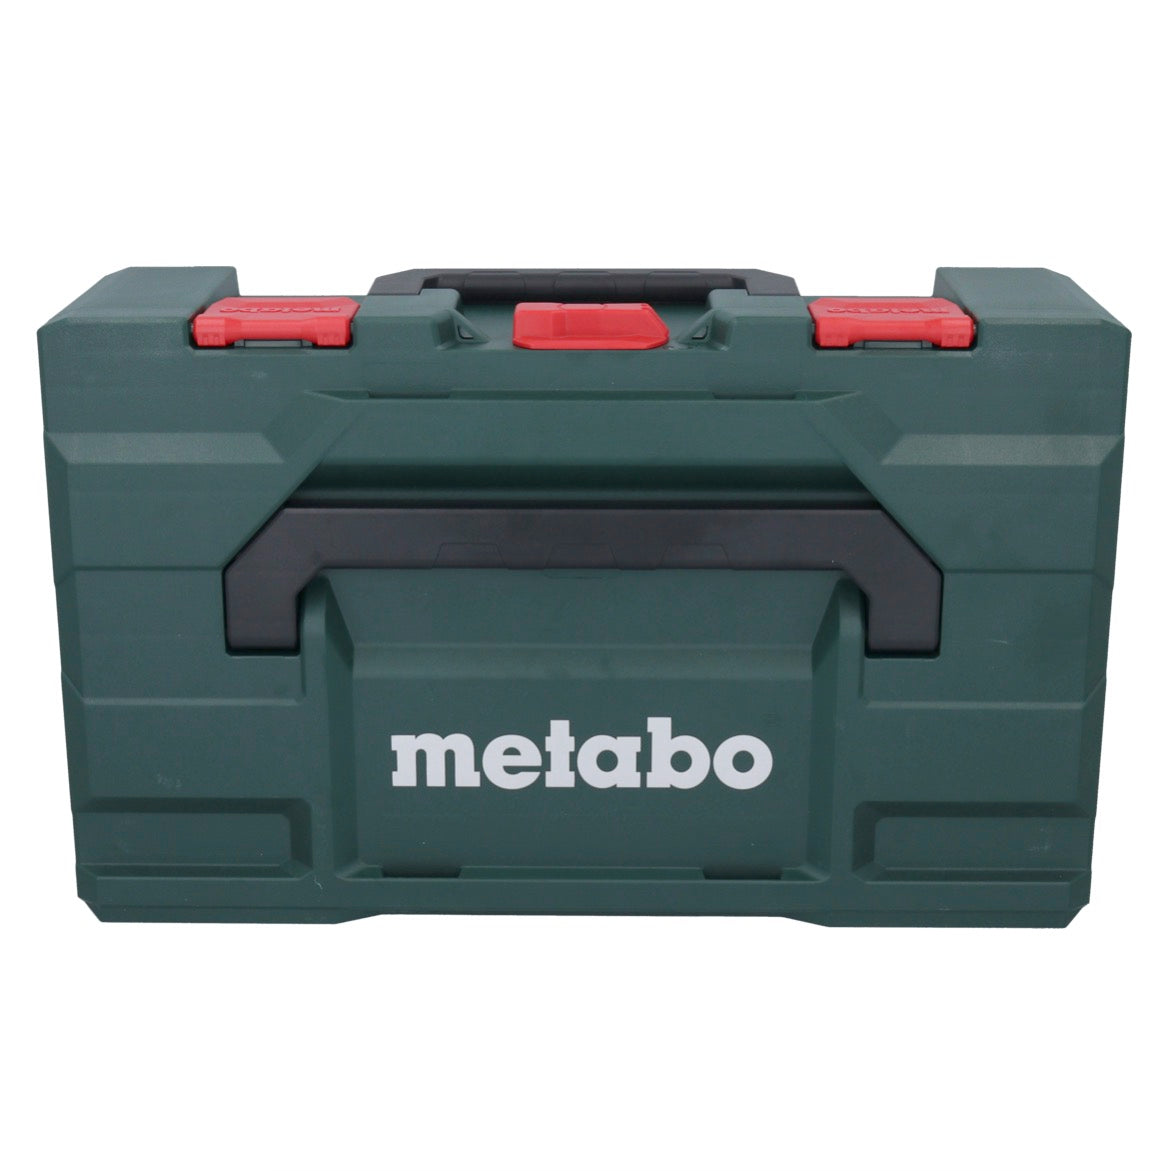 Metabo WPB 18 LT BL 11-125 Quick Akku Winkelschleifer 18 V 125 mm Brushless + 2x Akku 4,0 Ah + Ladegerät + metaBOX - Toolbrothers